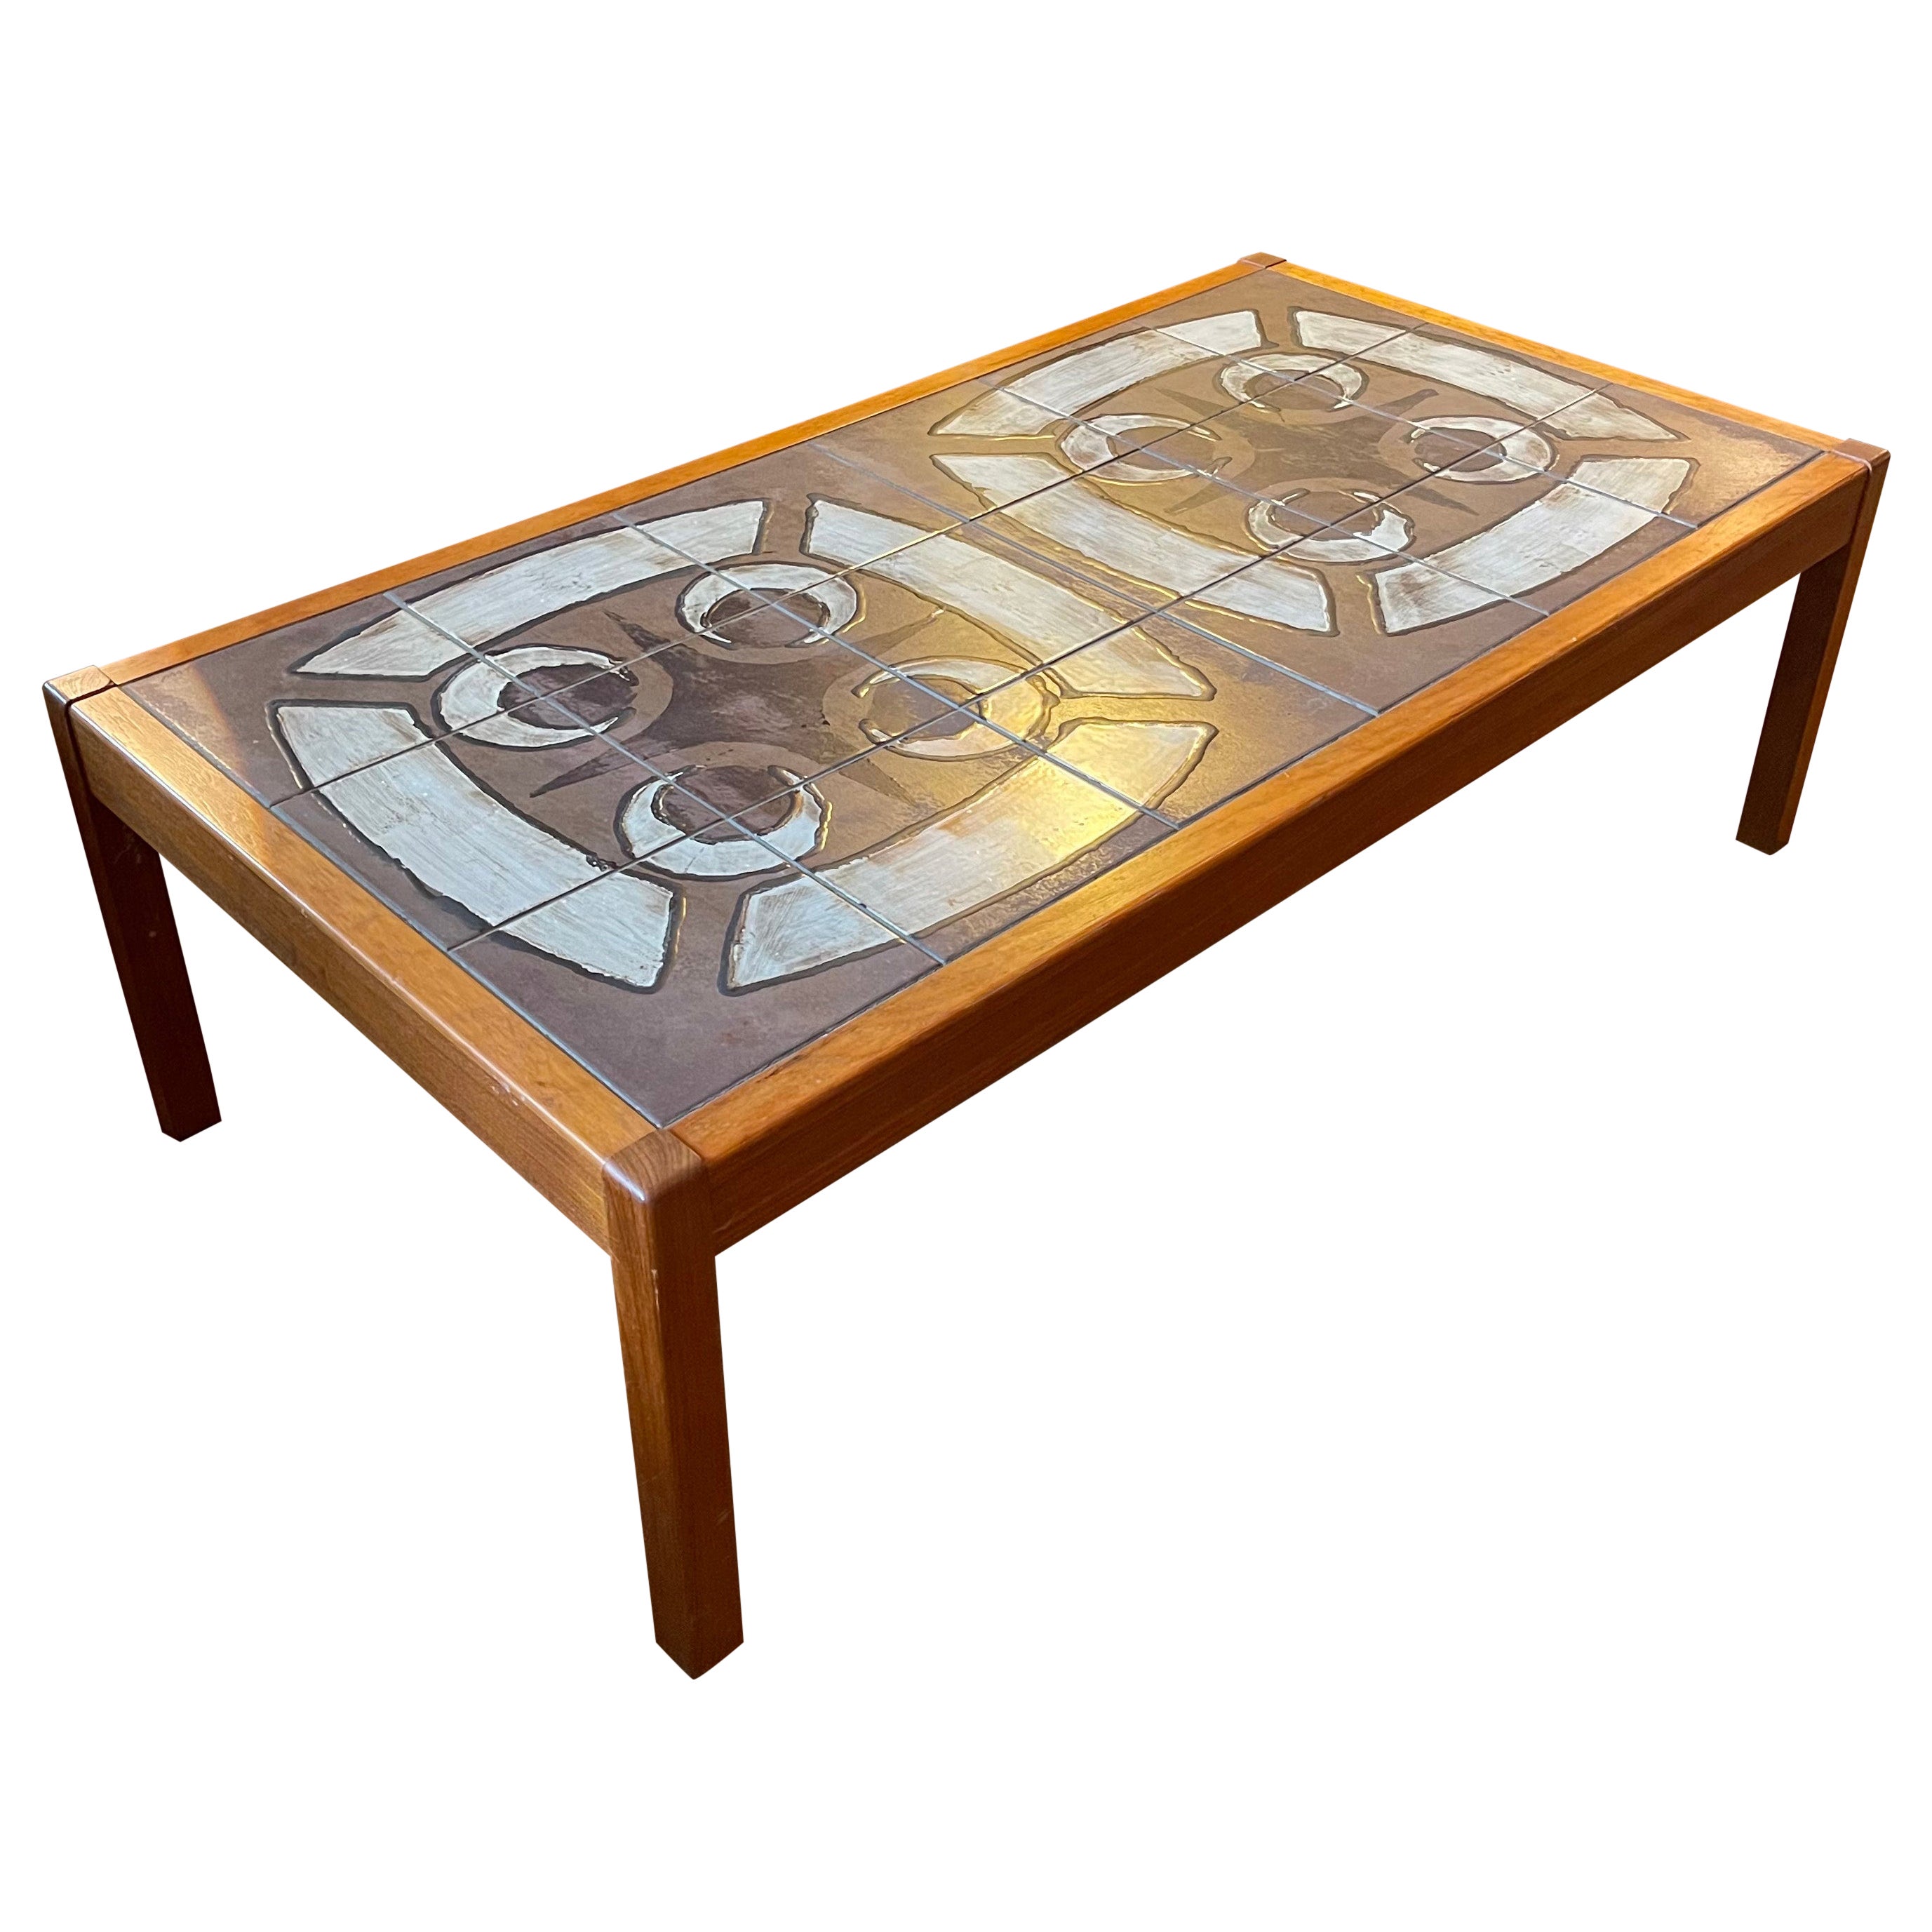 Danish Modern Teak and Ceramic Tile Coffee Table